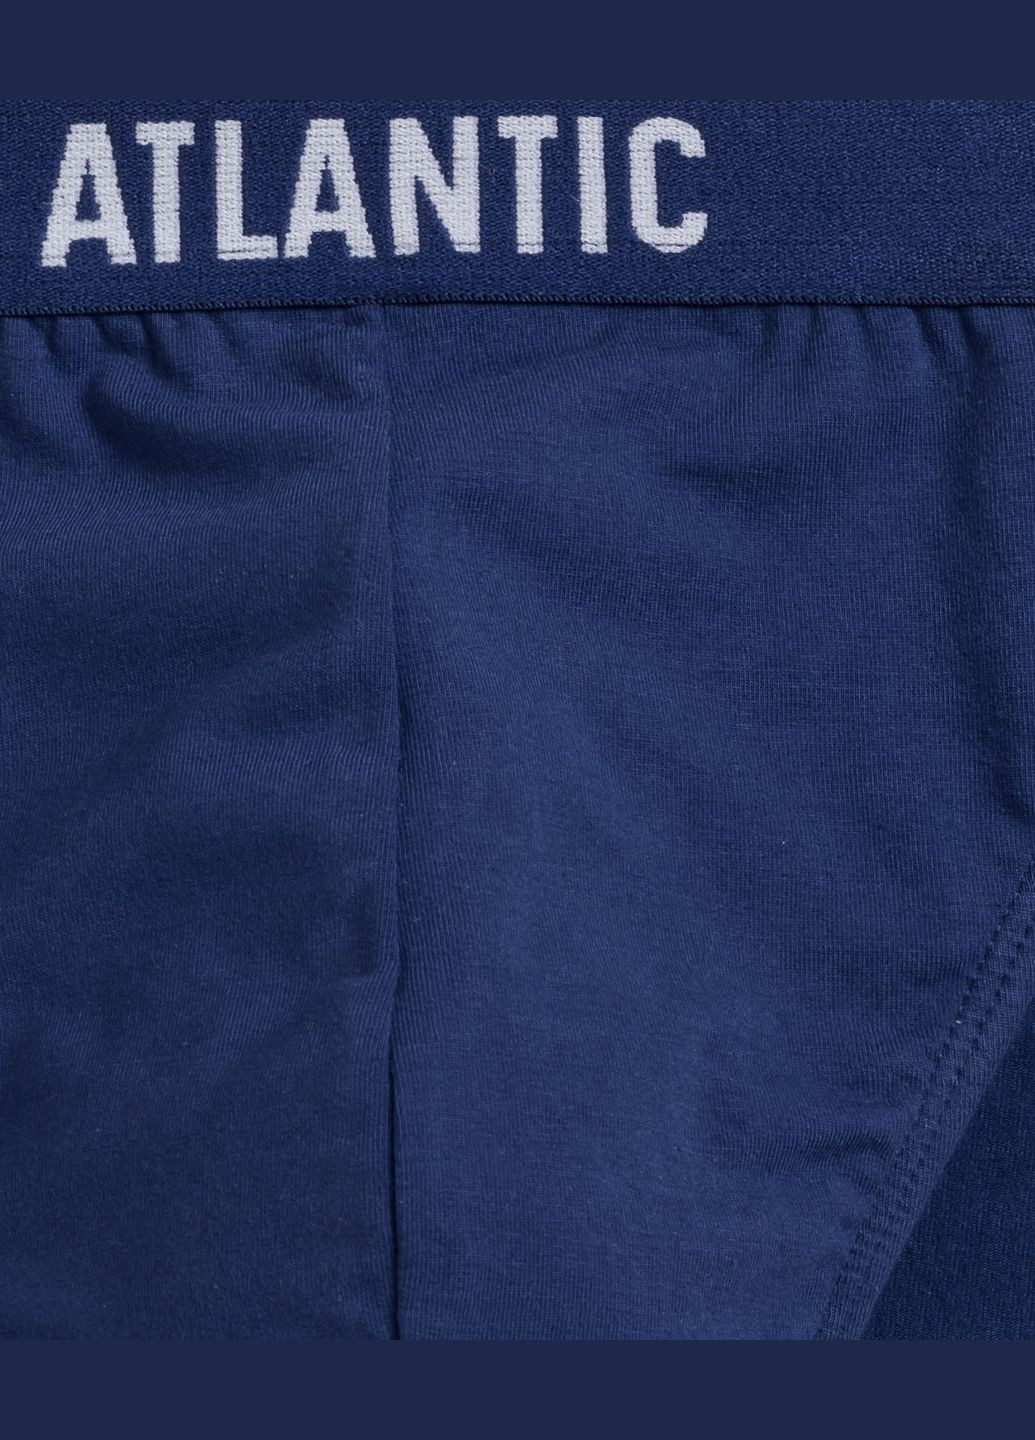 Труси (5 шт) спорт Atlantic плавки (278611466)